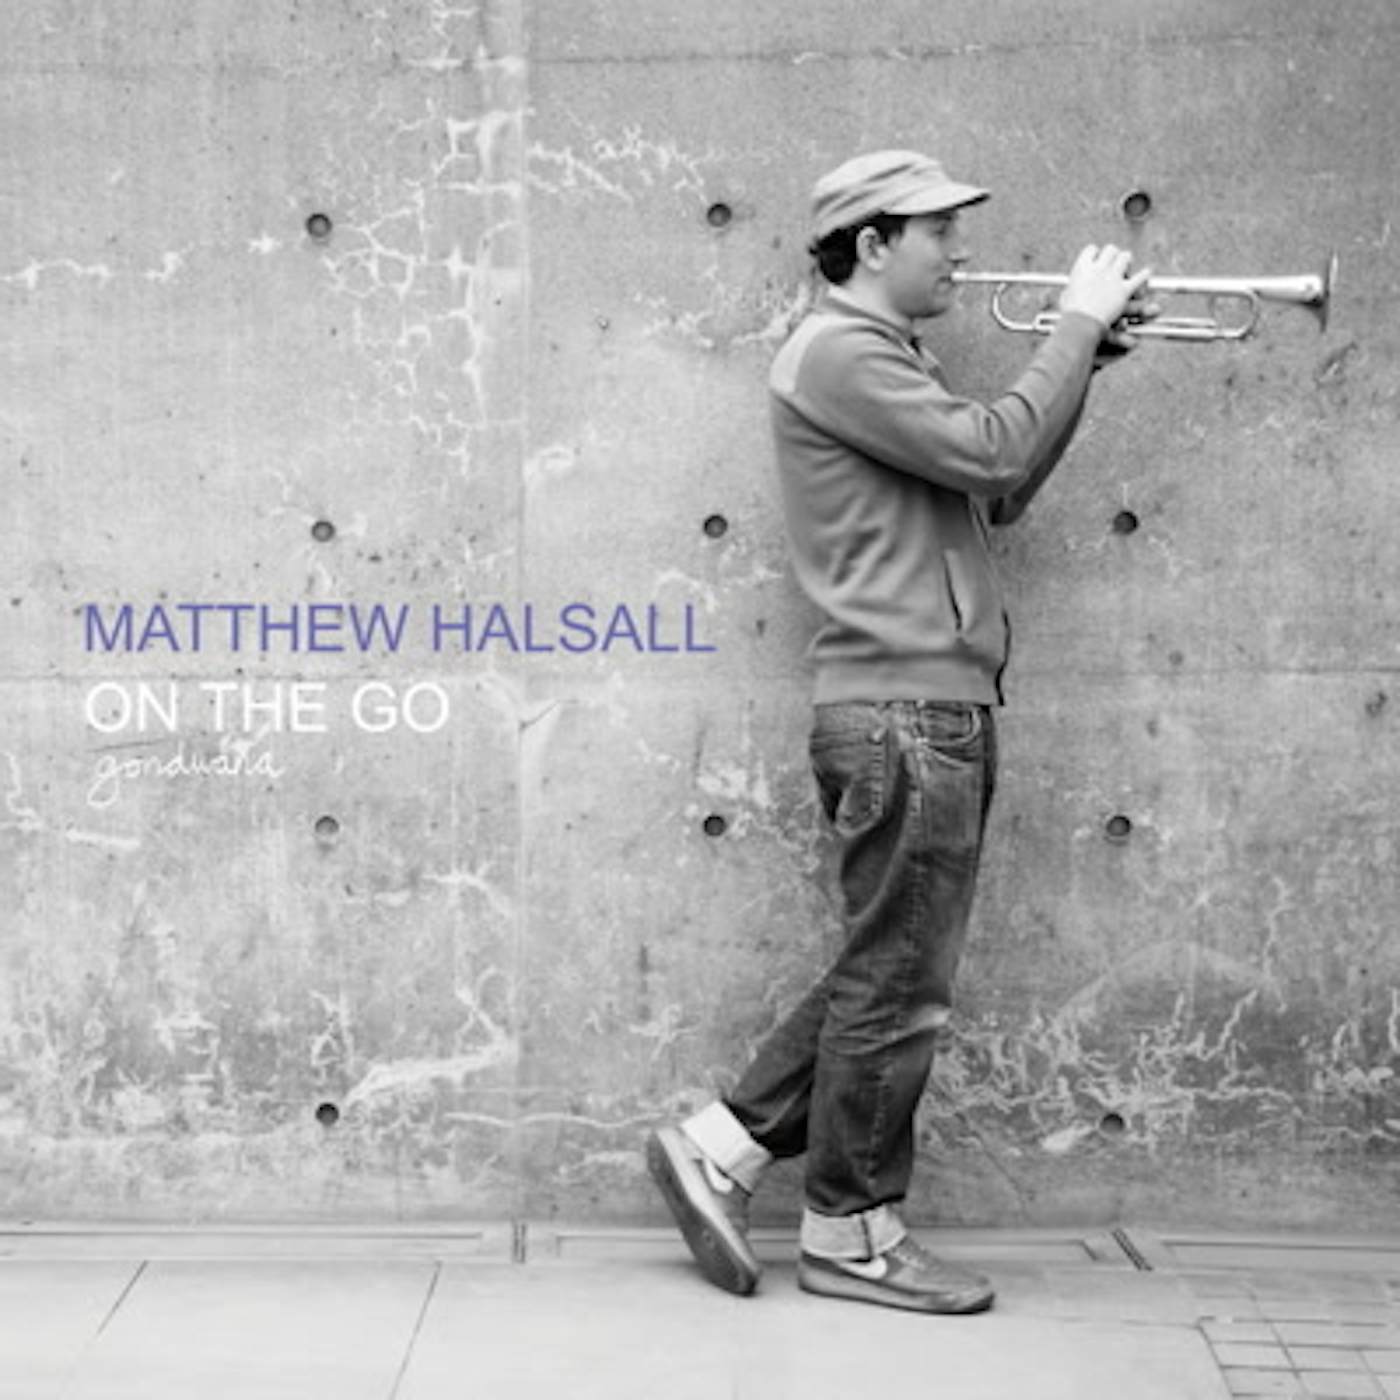 Matthew Halsall ON THE GO CD